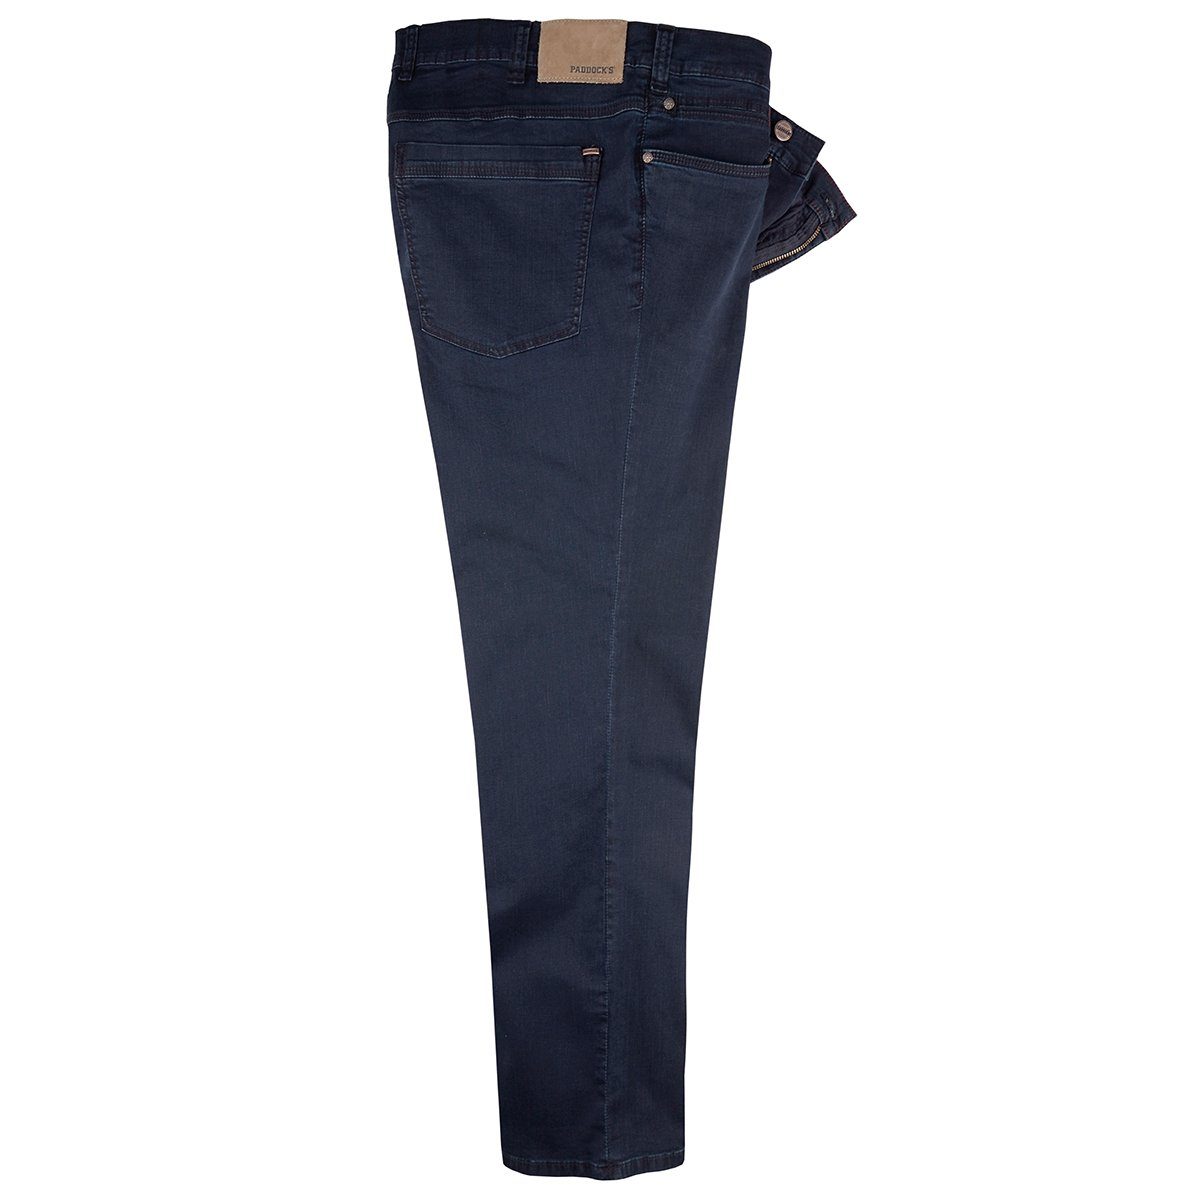 Übergröße Paddock's Ranger Paddock´s Stretchjeans dunkelblau Stretch-Jeans